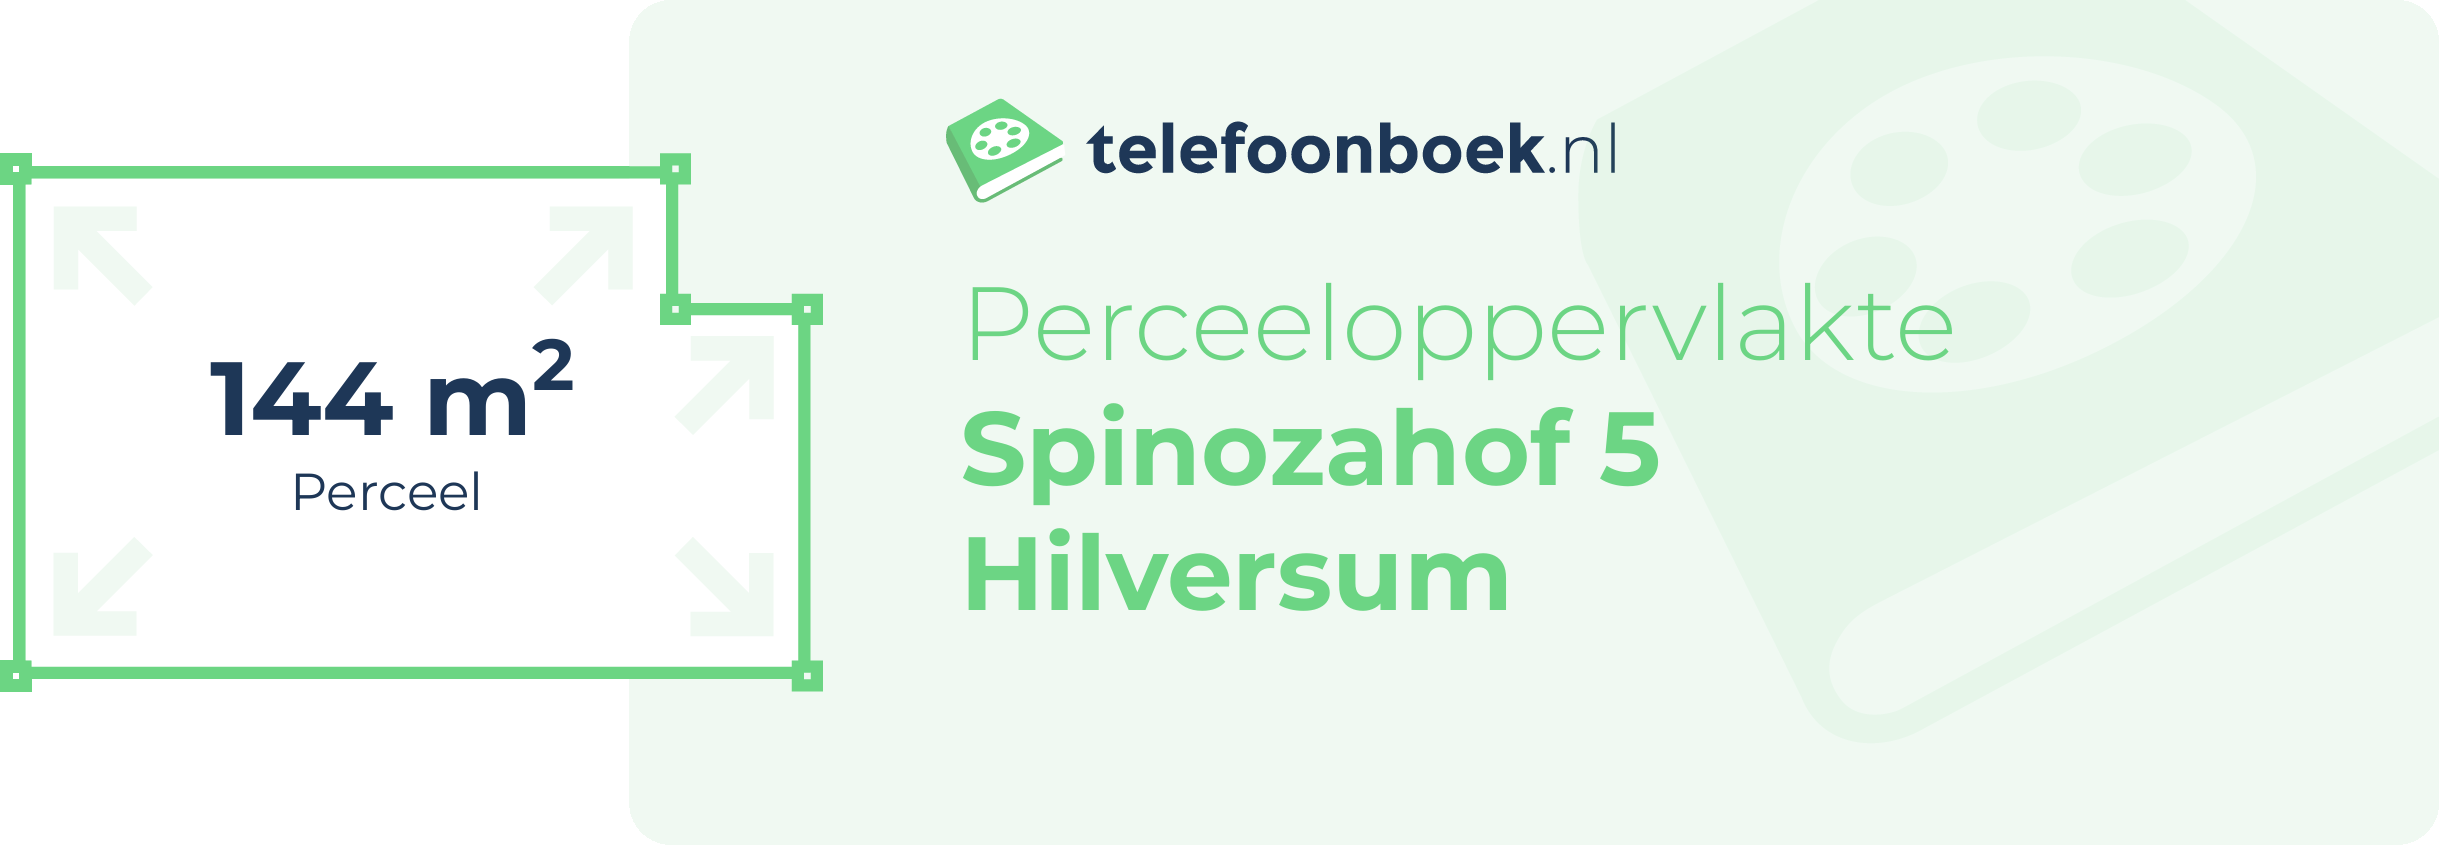 Perceeloppervlakte Spinozahof 5 Hilversum